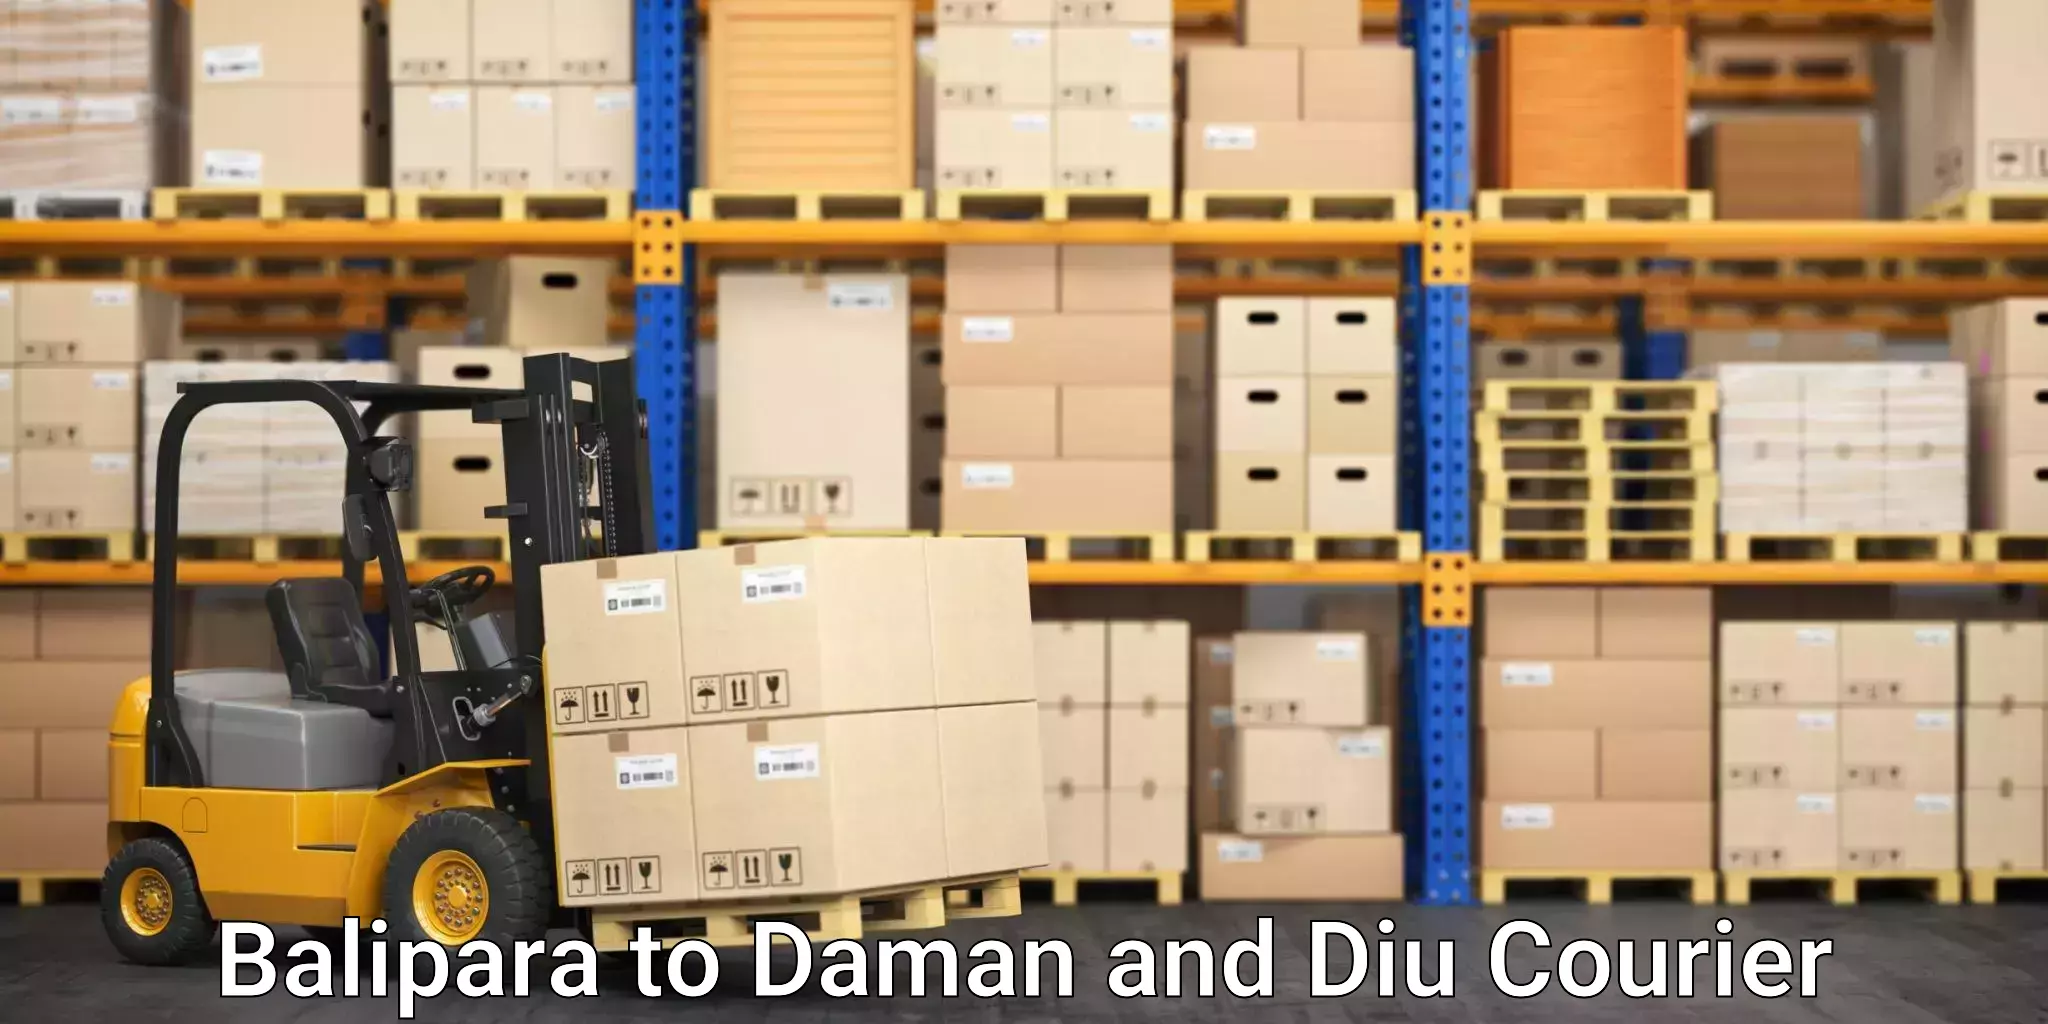 Courier service innovation Balipara to Daman and Diu